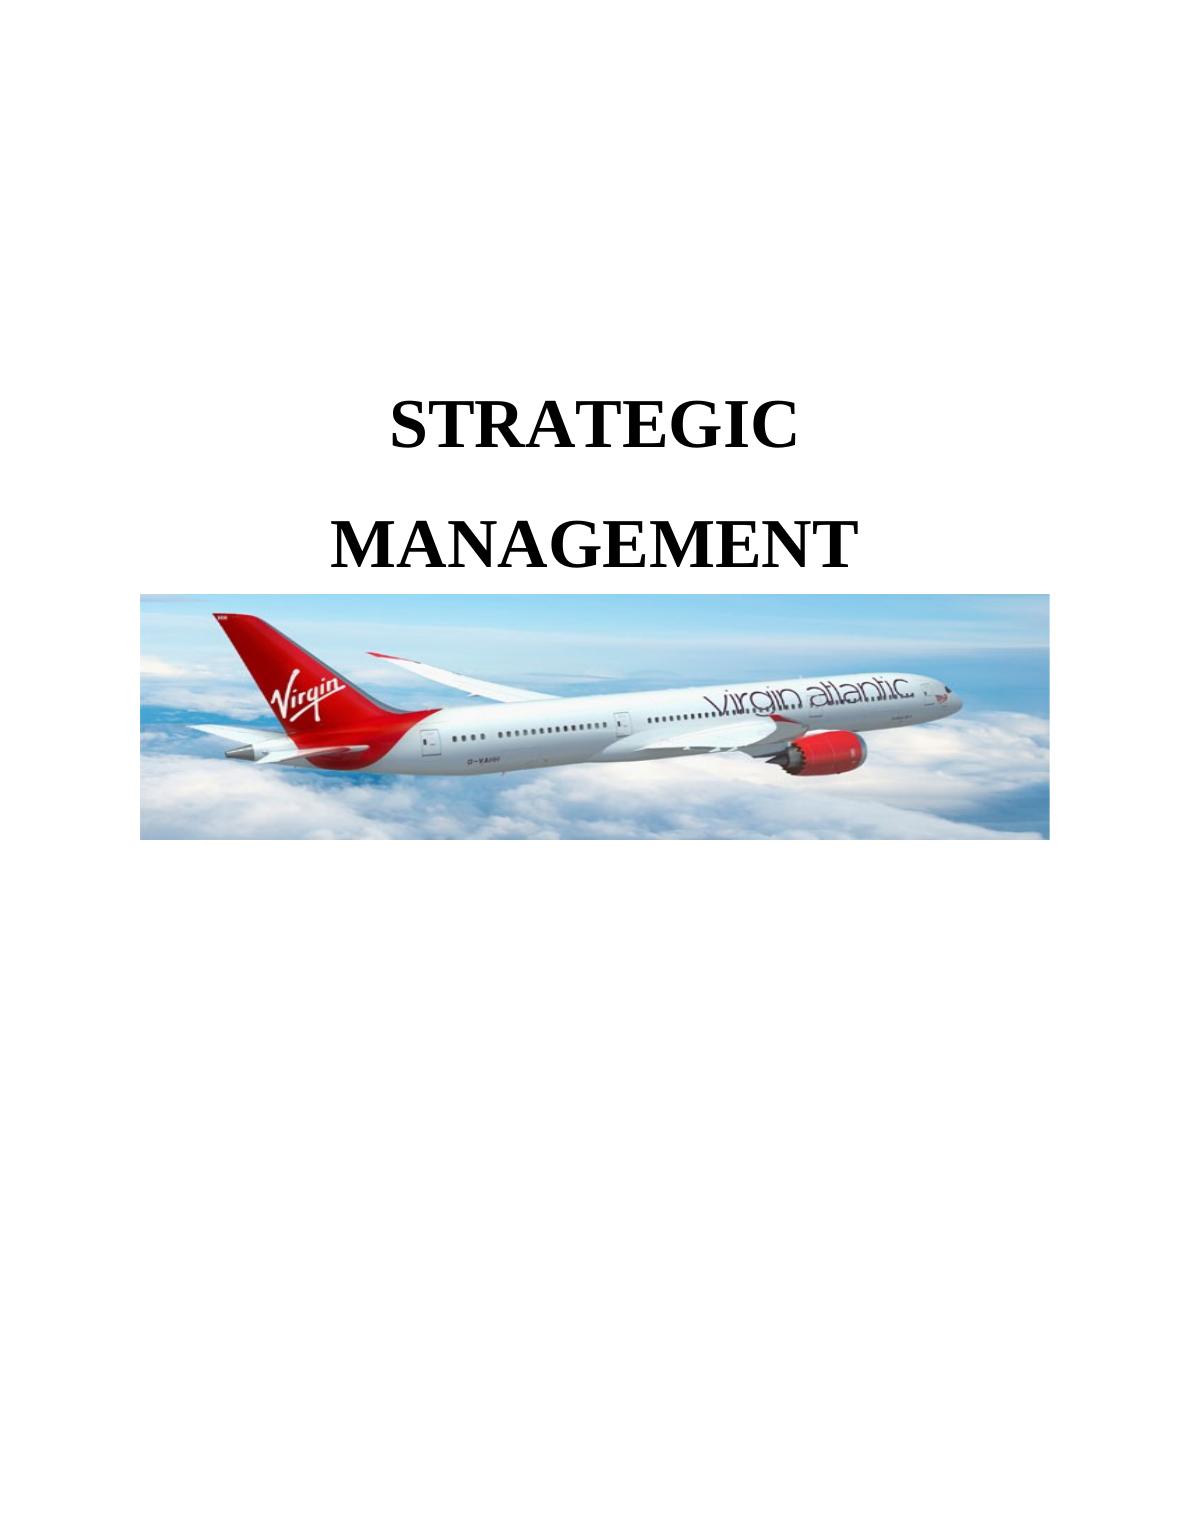 Strategic Management: Virgin Atlantic_1